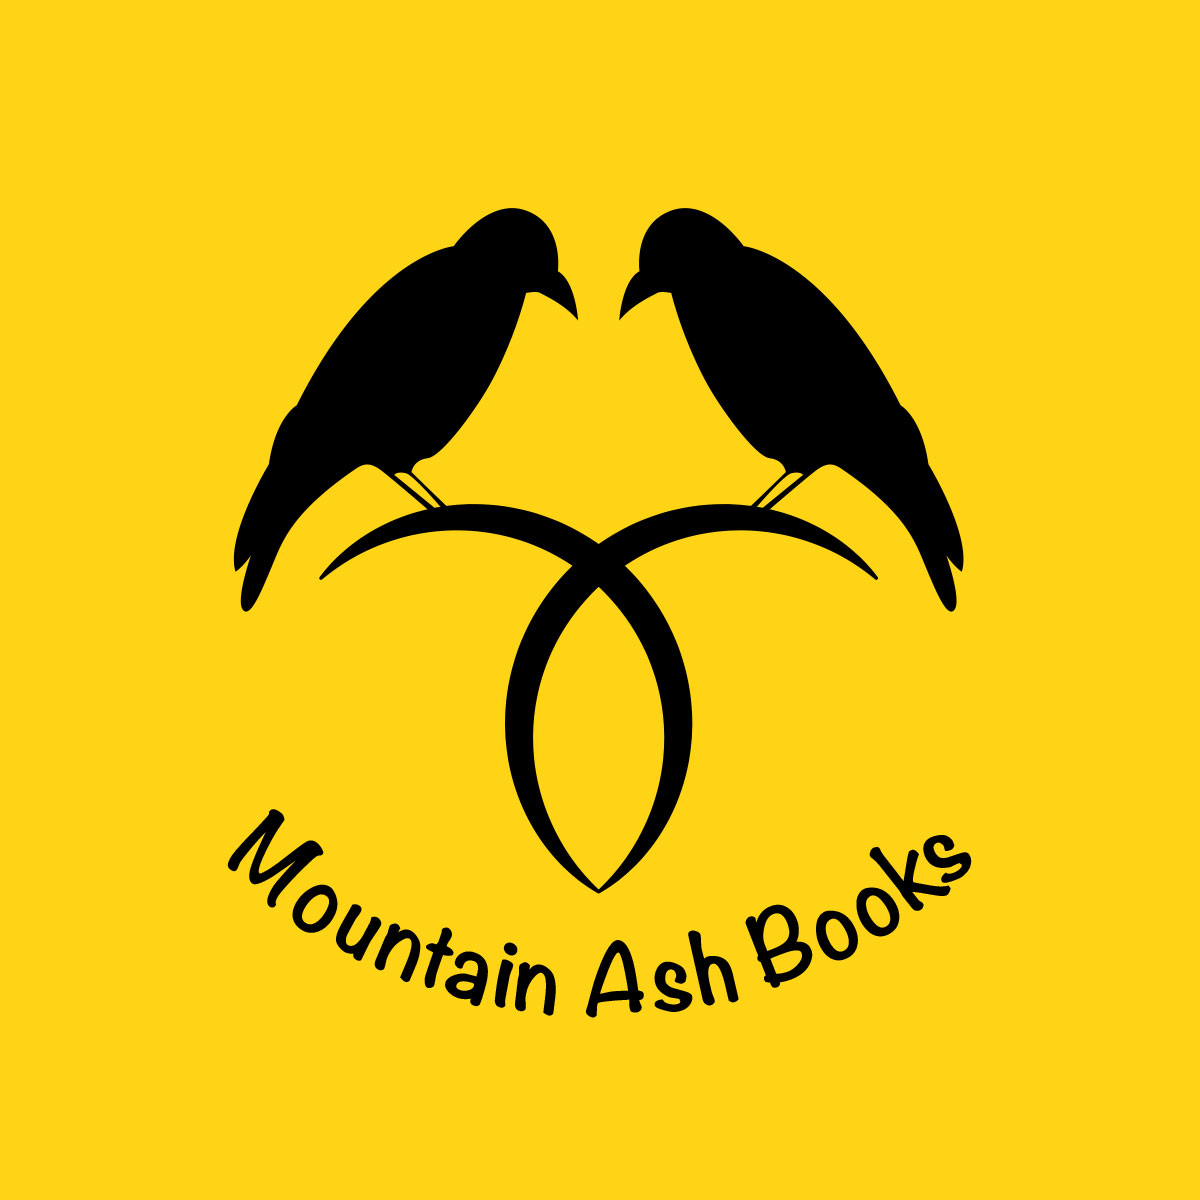 Logo para Mountain Ash Books